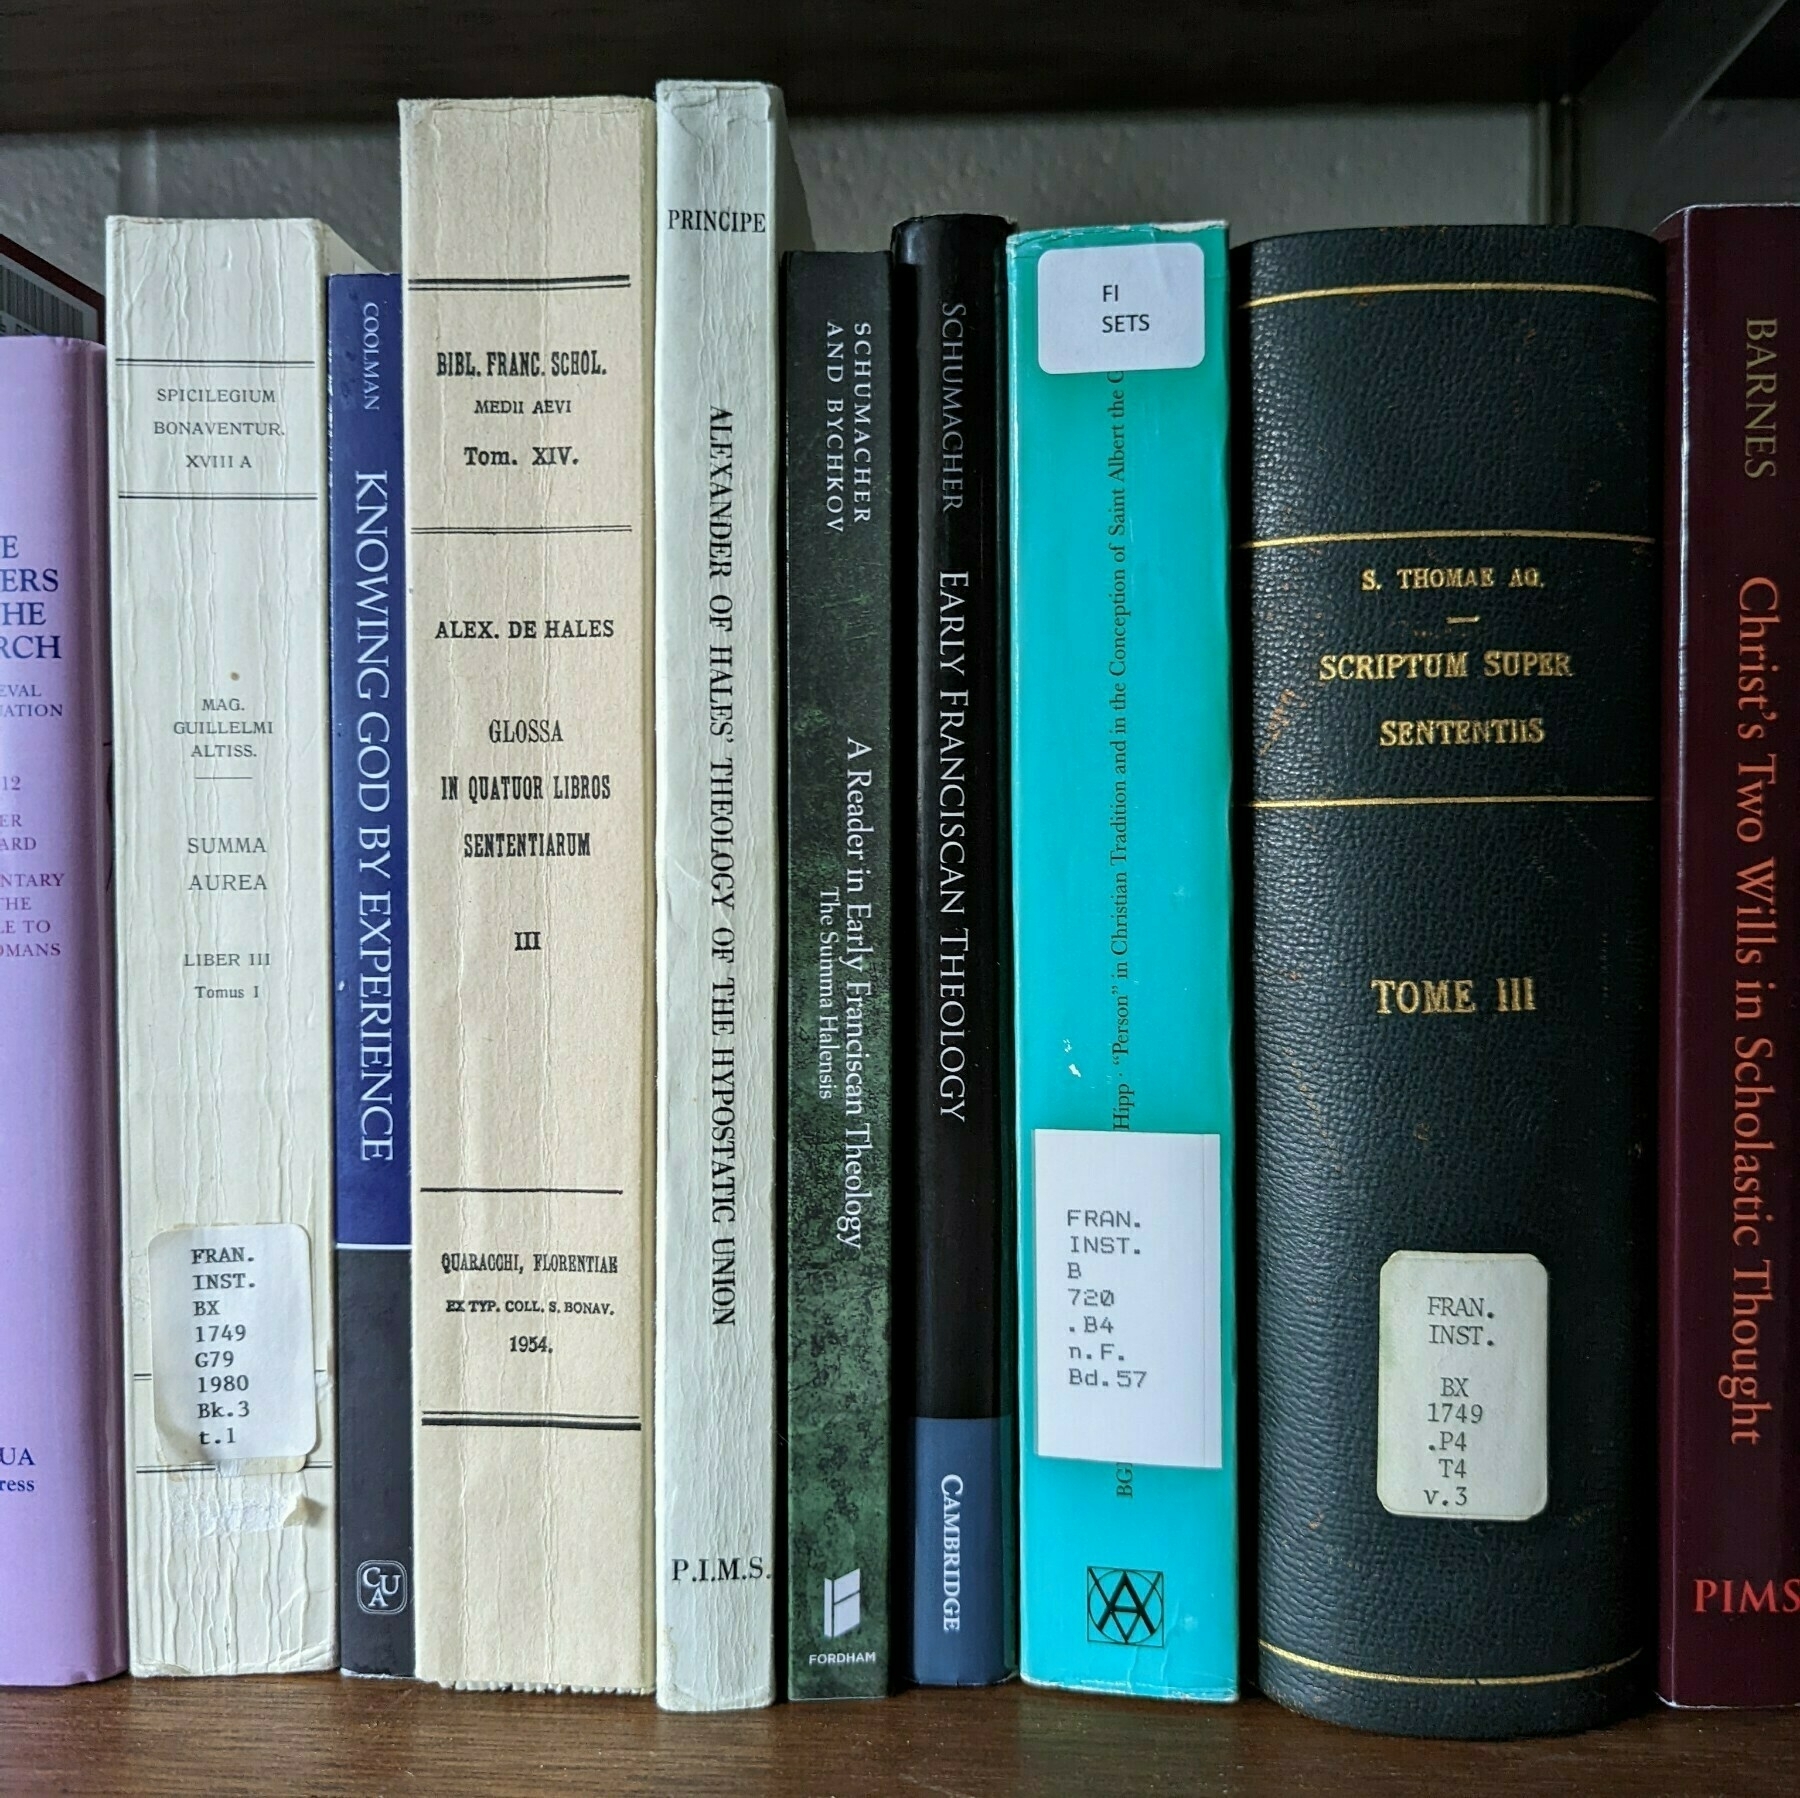 A line of books